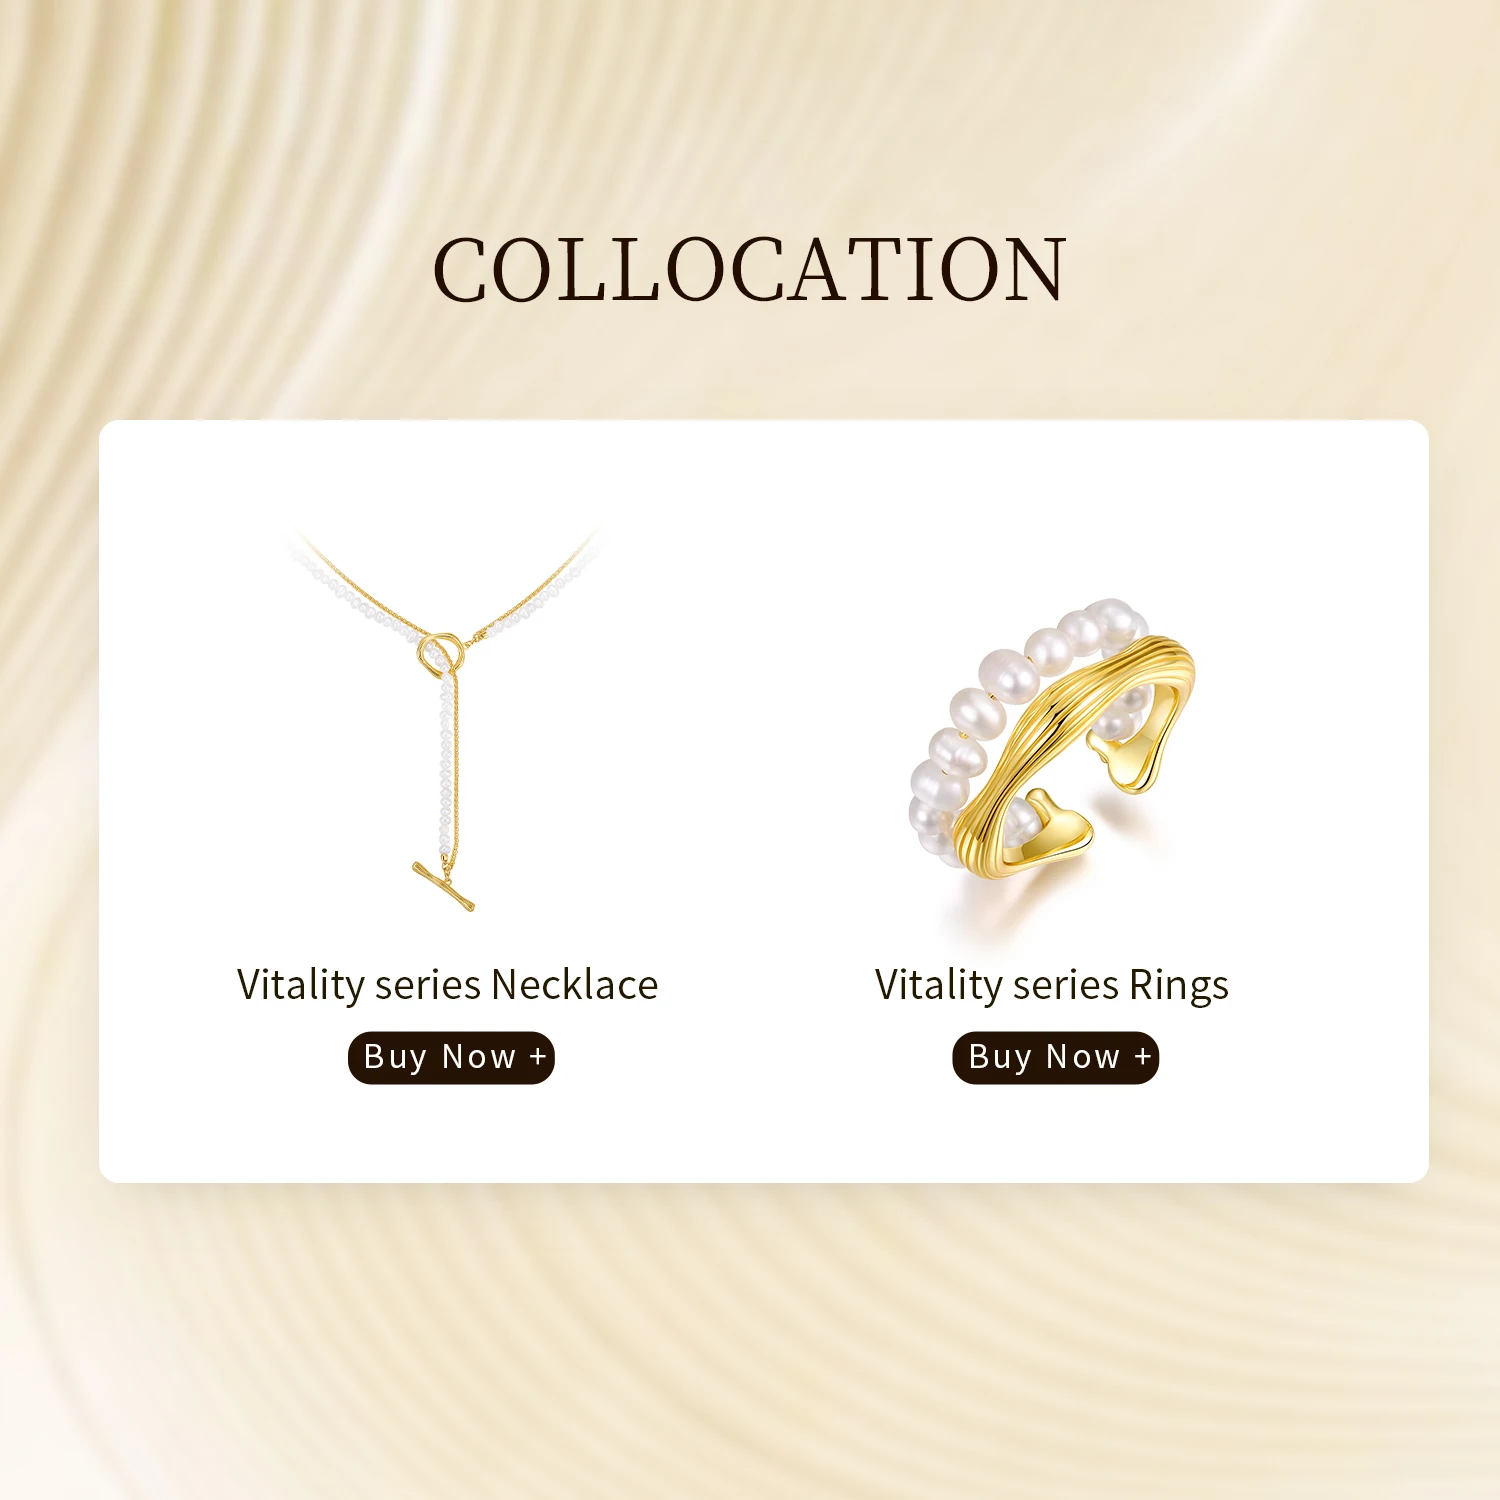 CDE YN1043 Fine 925 Sterling Silver Jewelry Necklace Wholesale 18K Gold Plated Women Pearl Pendant Necklace